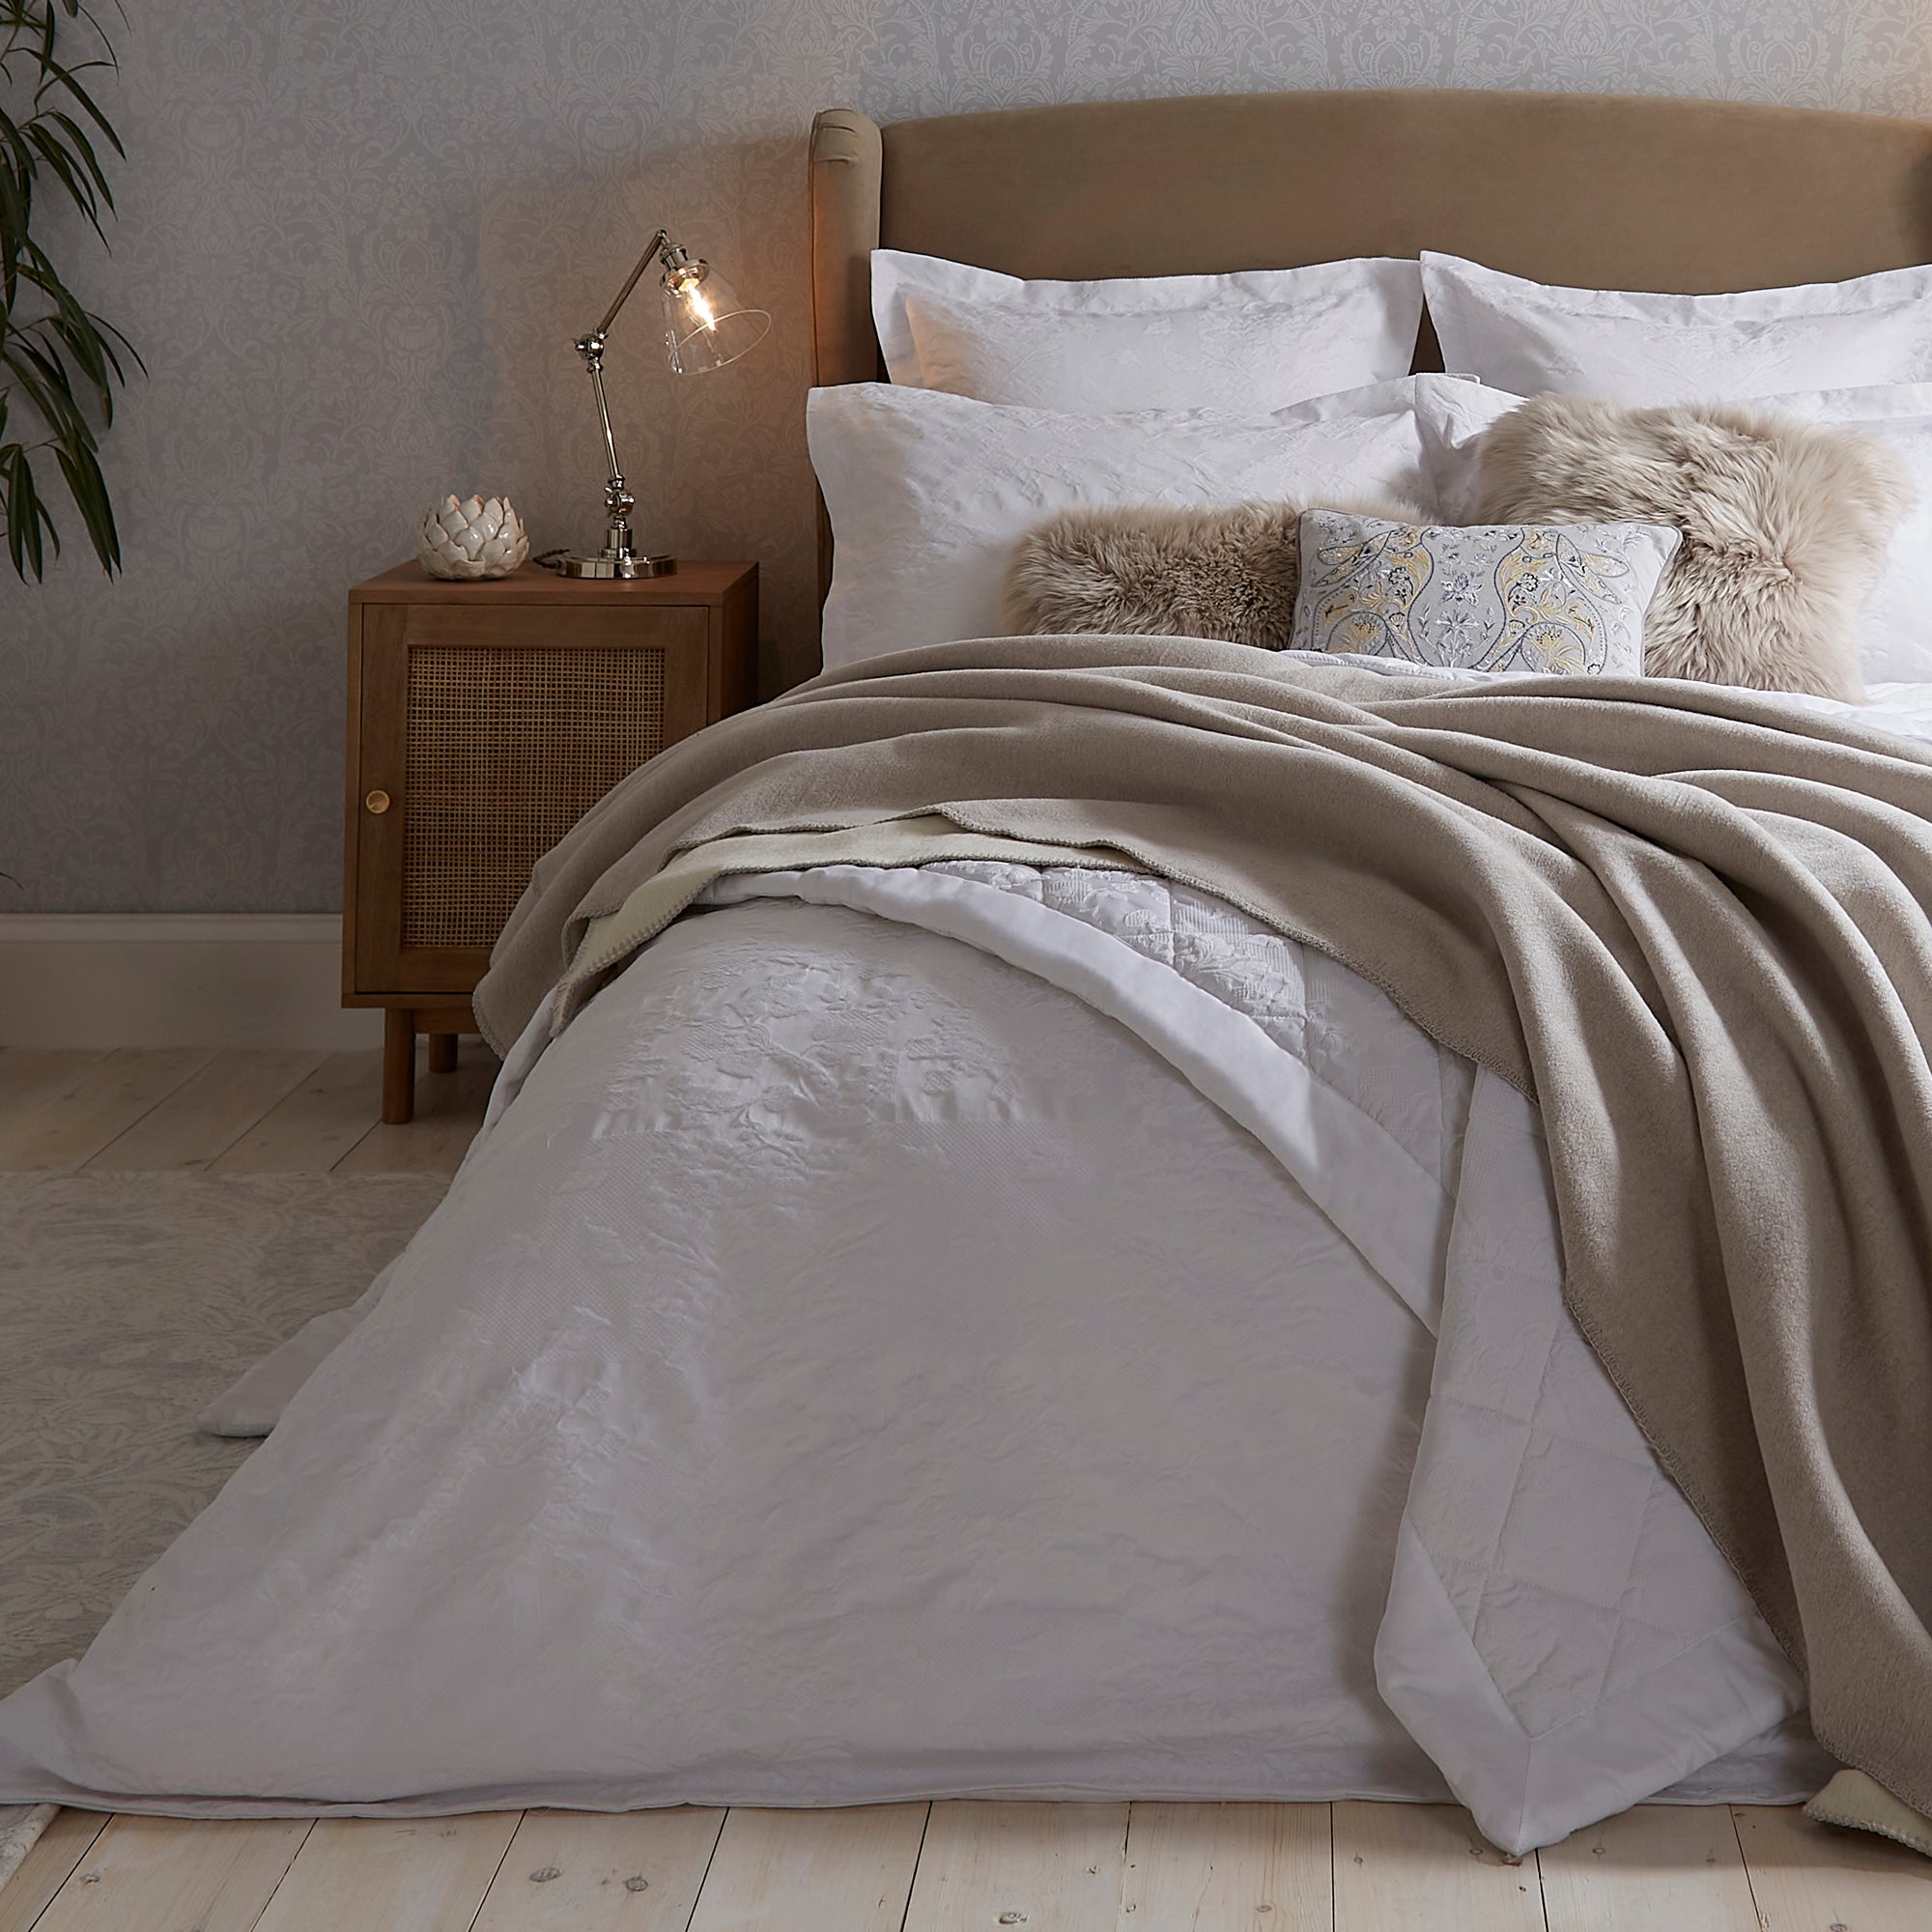 Dorma Purity Kempley Jacquard White Duvet Cover and Pillowcase Set